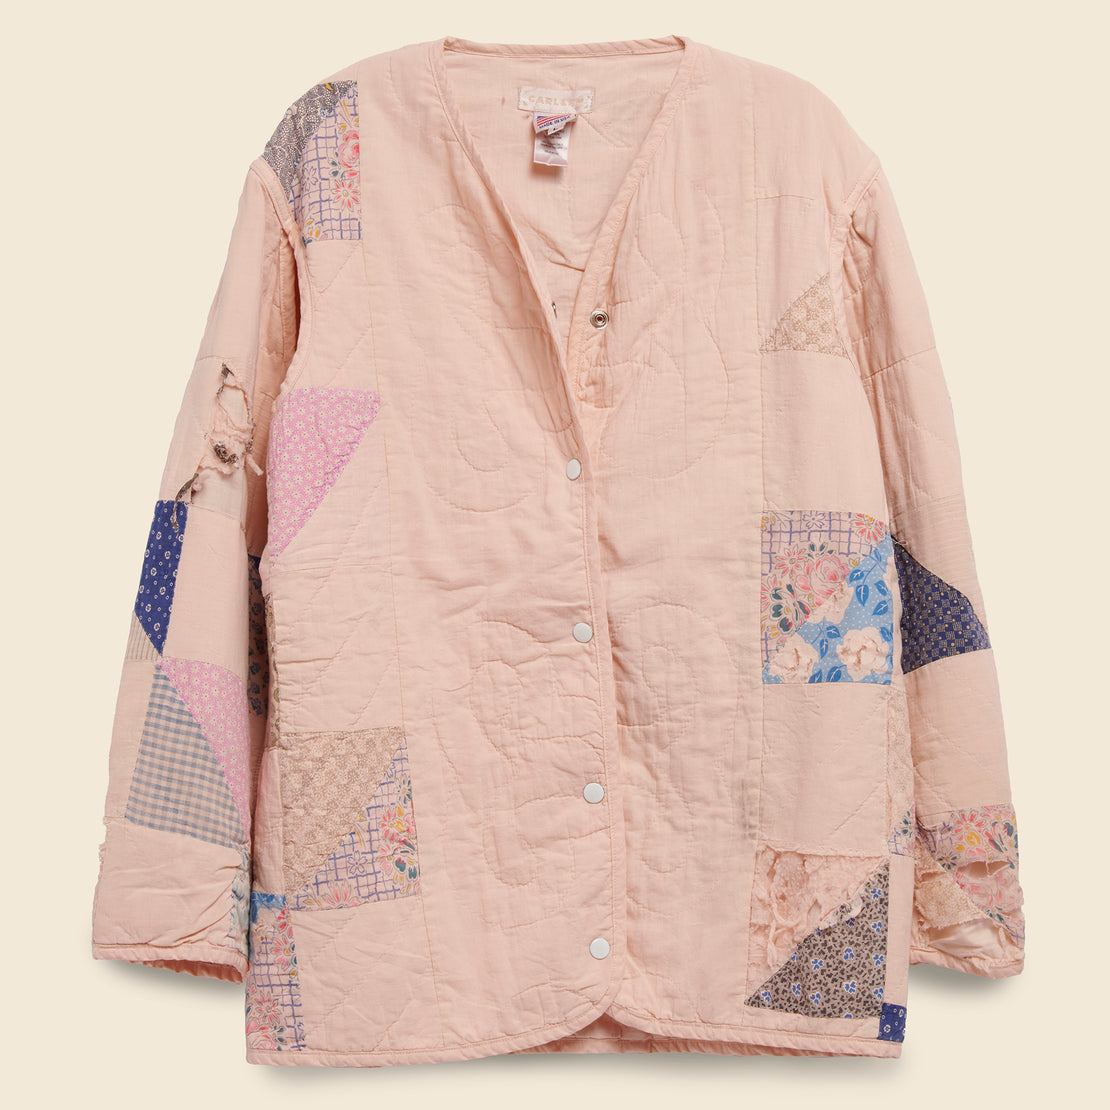 Carleen Quilt Liner Jacket - Pink Overdye, Triangle Sides